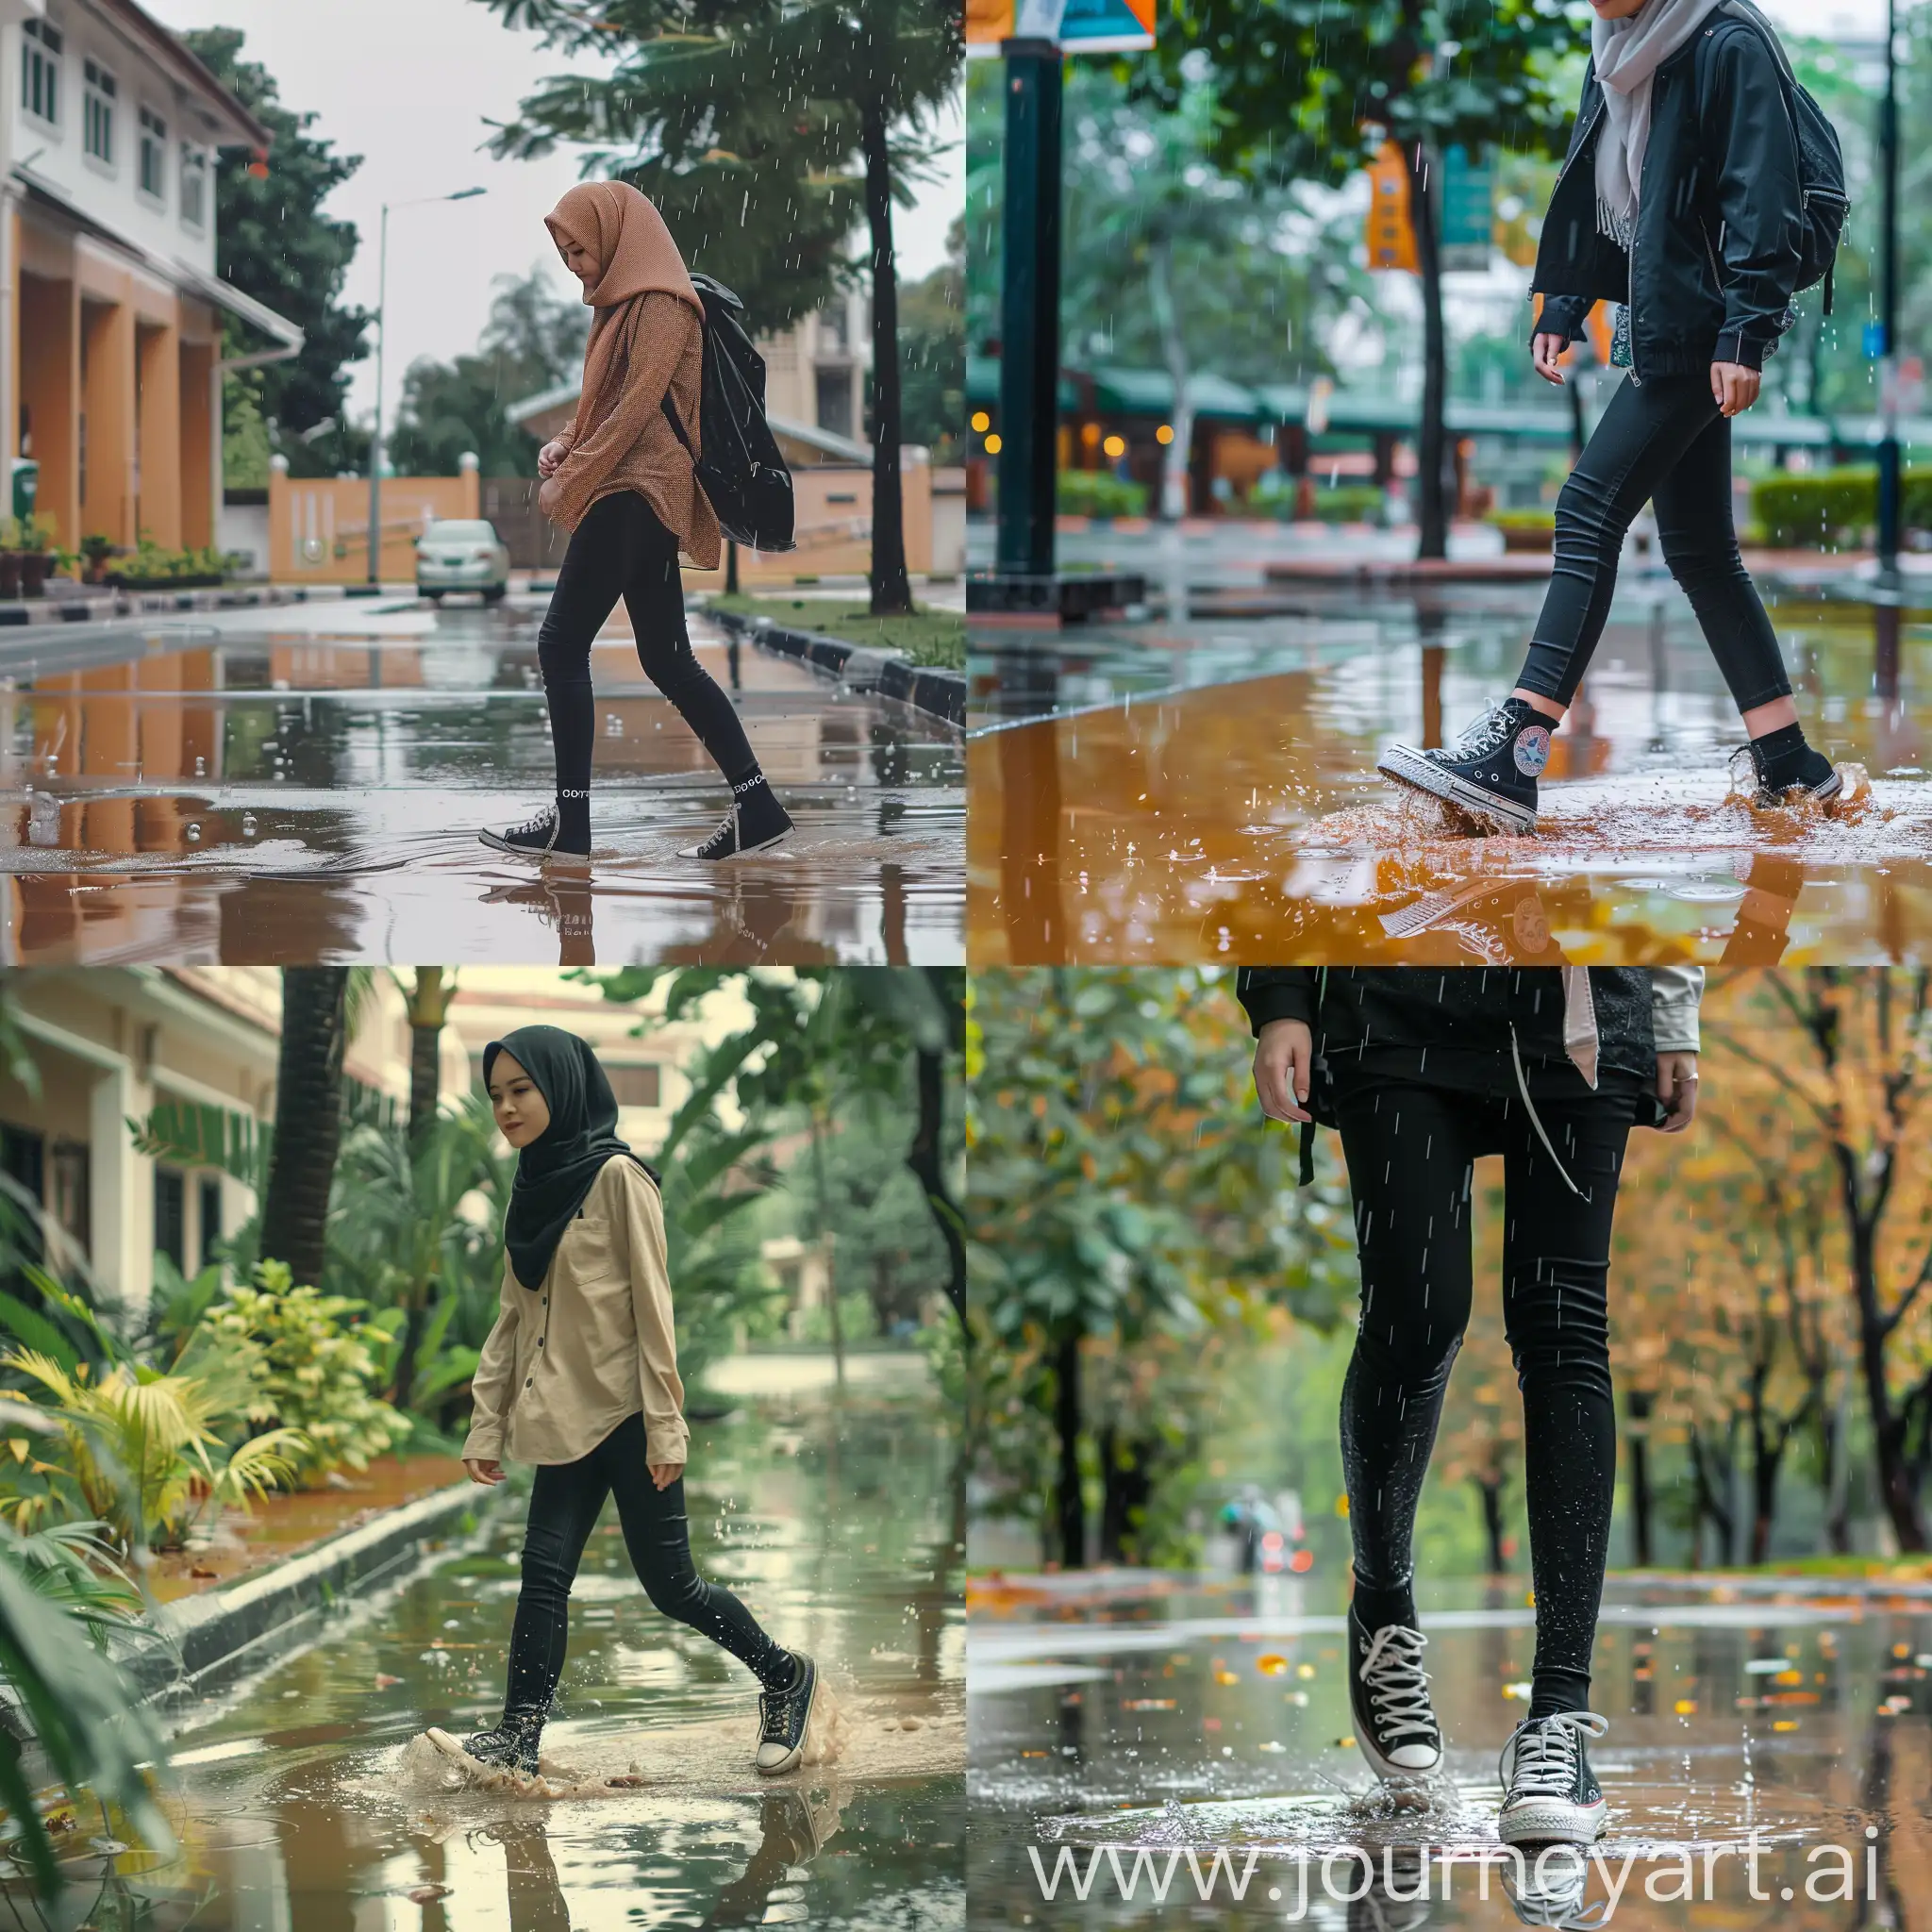 Stylish-Malaysian-Hijab-Girl-Dancing-in-Heavy-Rain-with-Black-Converse